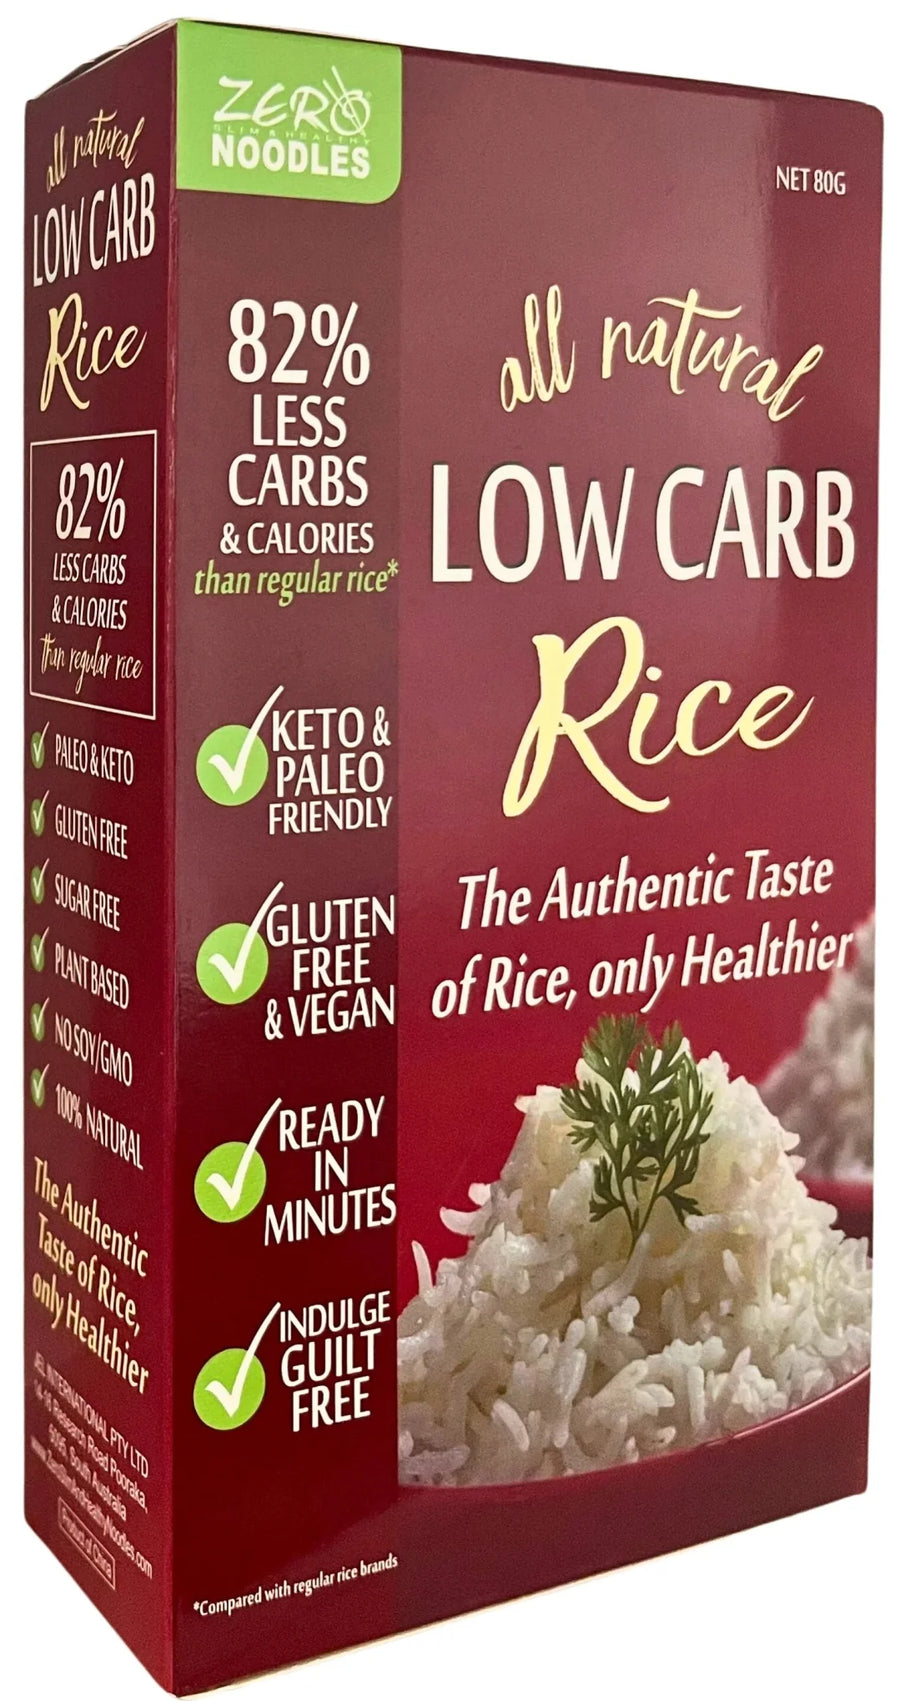 Low Carb Rice - Love Low Carb